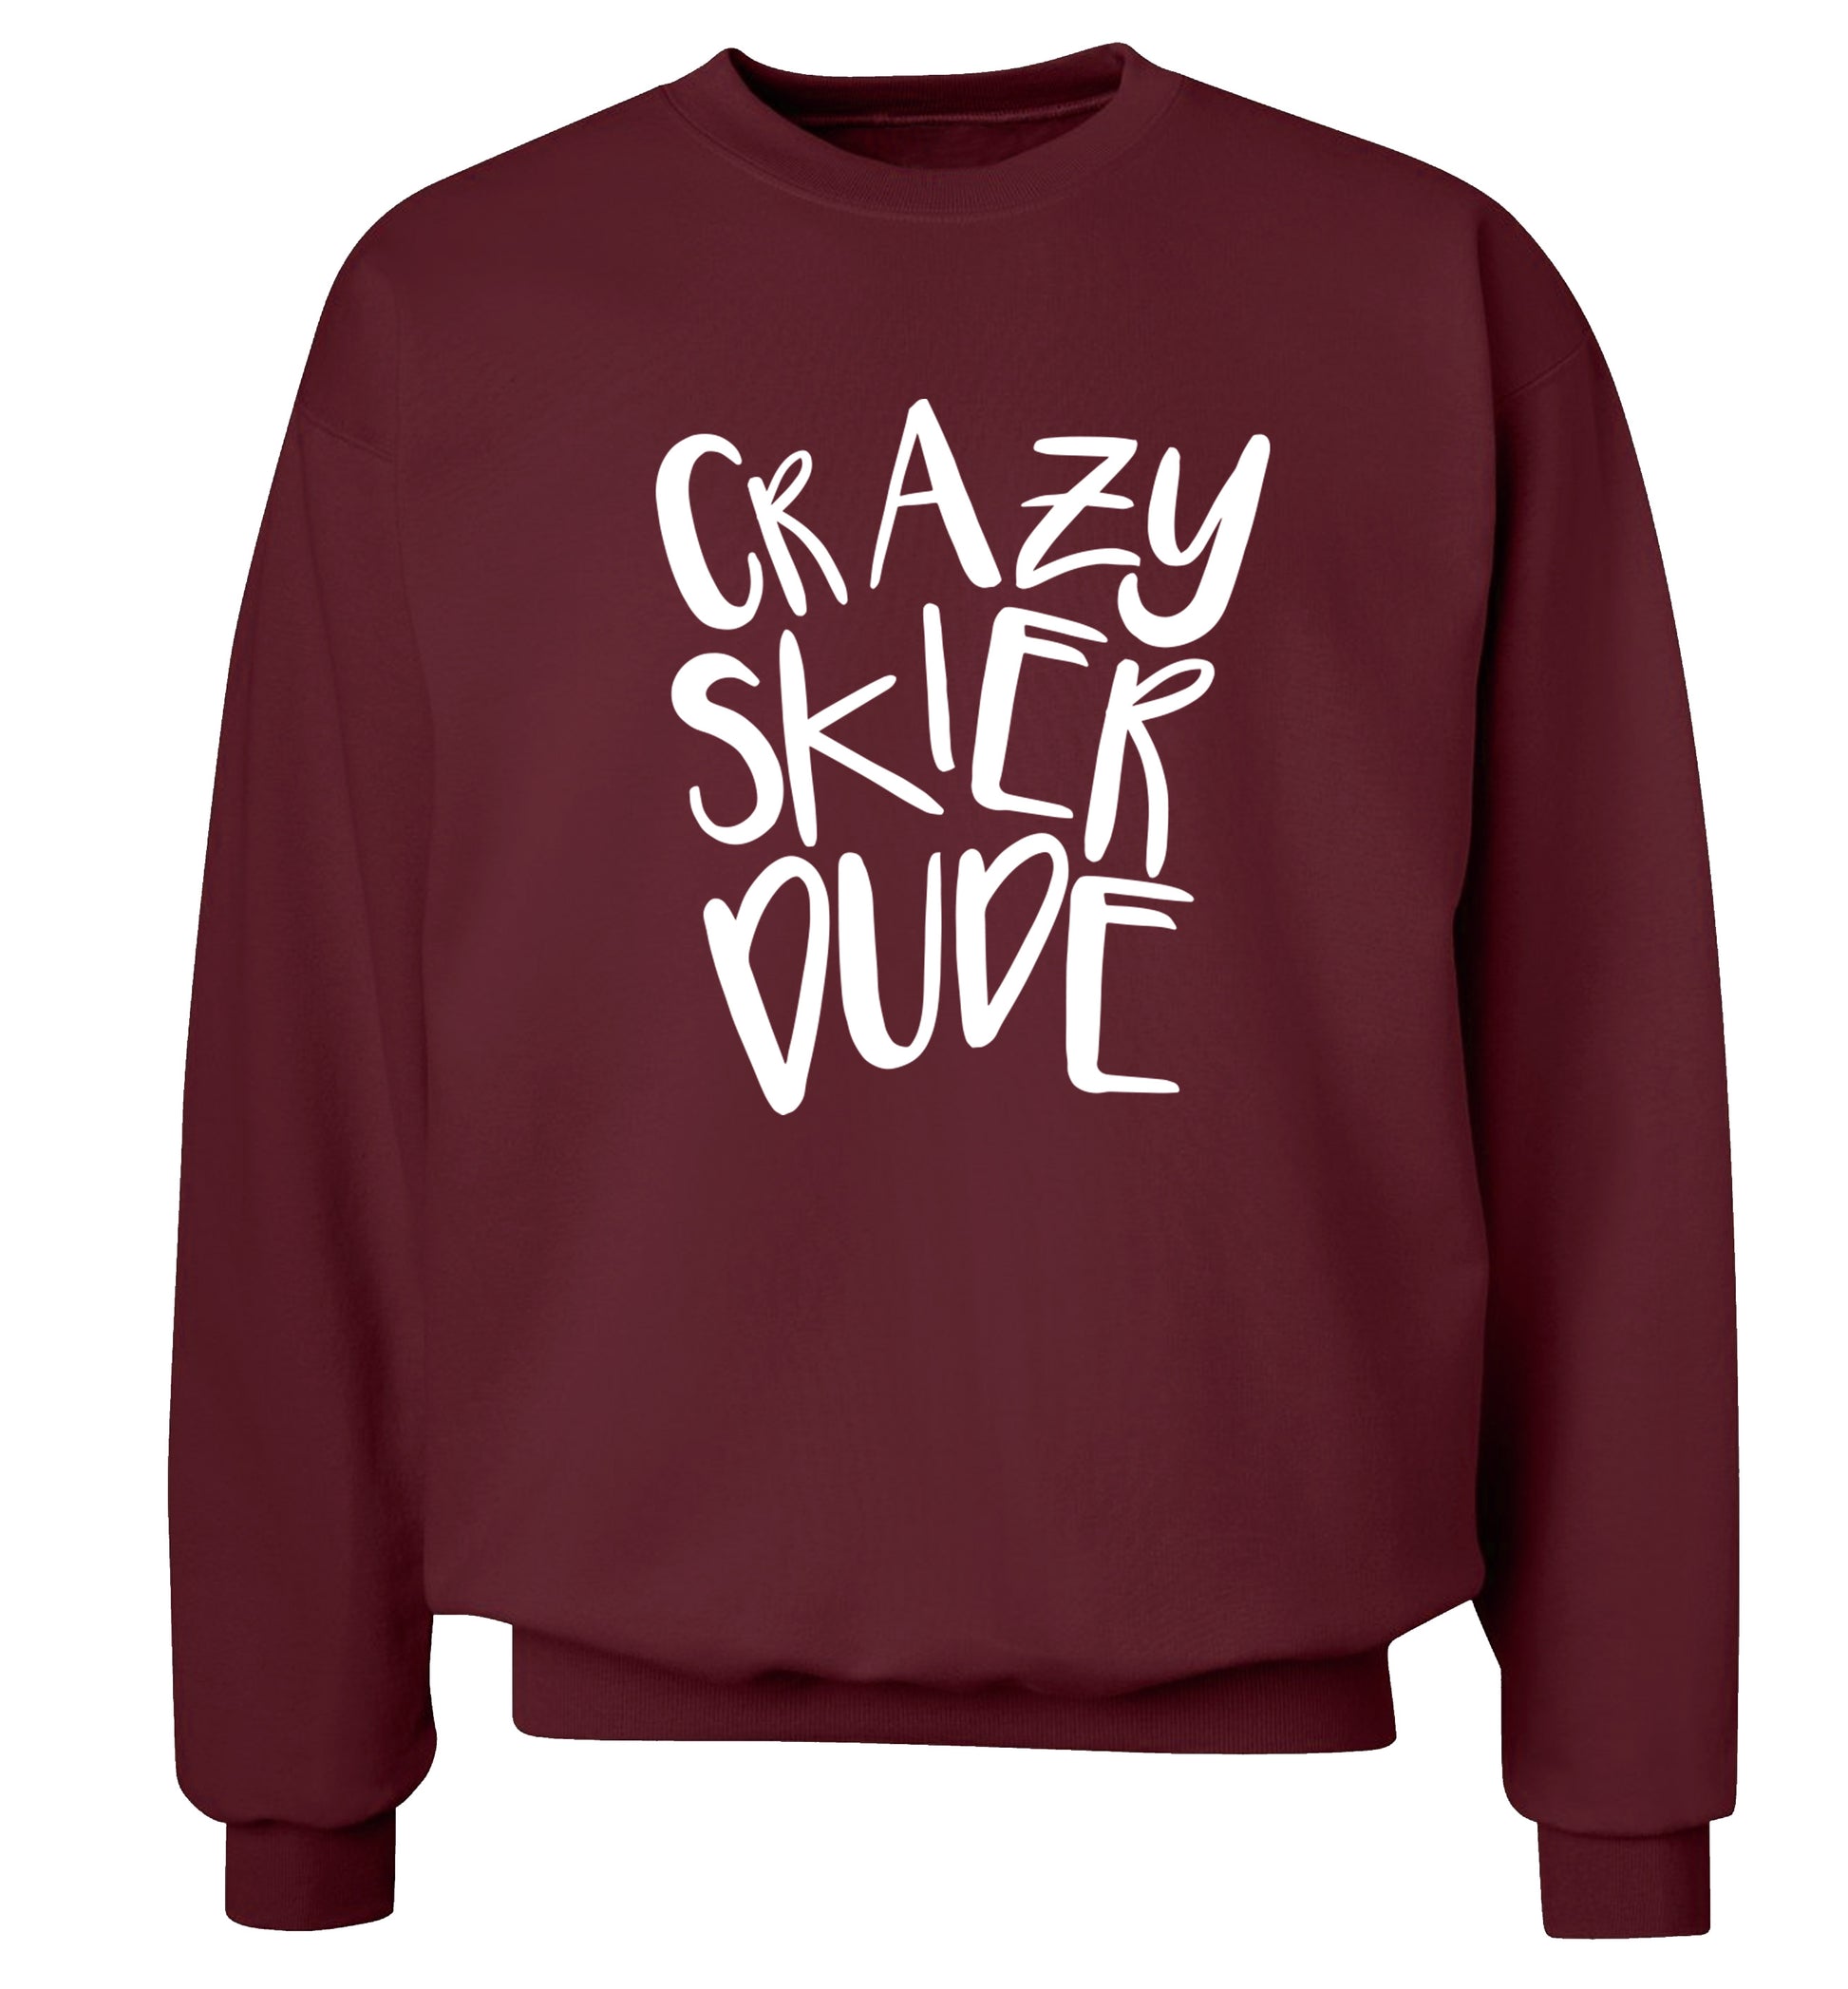 Crazy skier dude Adult's unisexmaroon Sweater 2XL